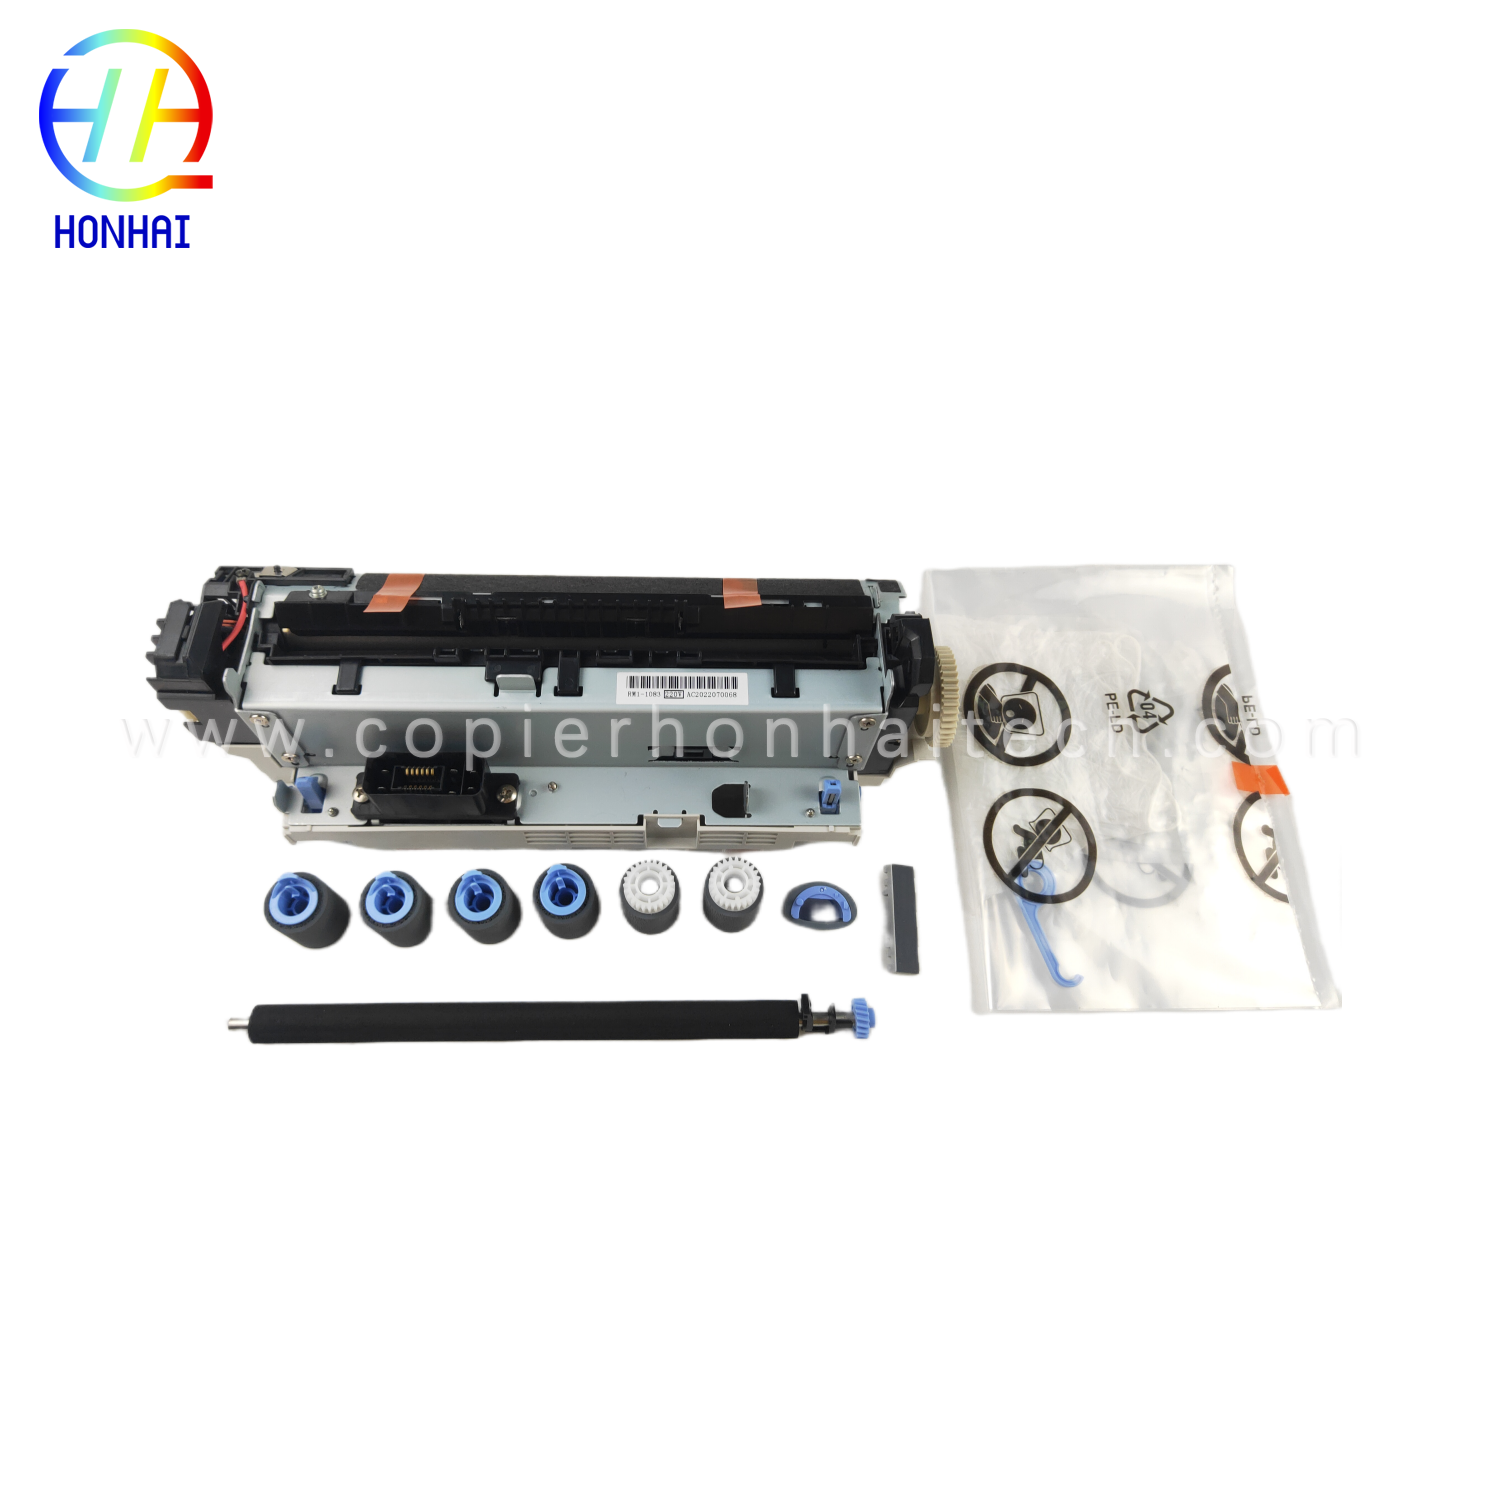 https://www.copierhonhaitech.com/maintenance-kit-220v-imported-brand-new-hp-laserjet-4250-4350-rm1-1083-000-product/